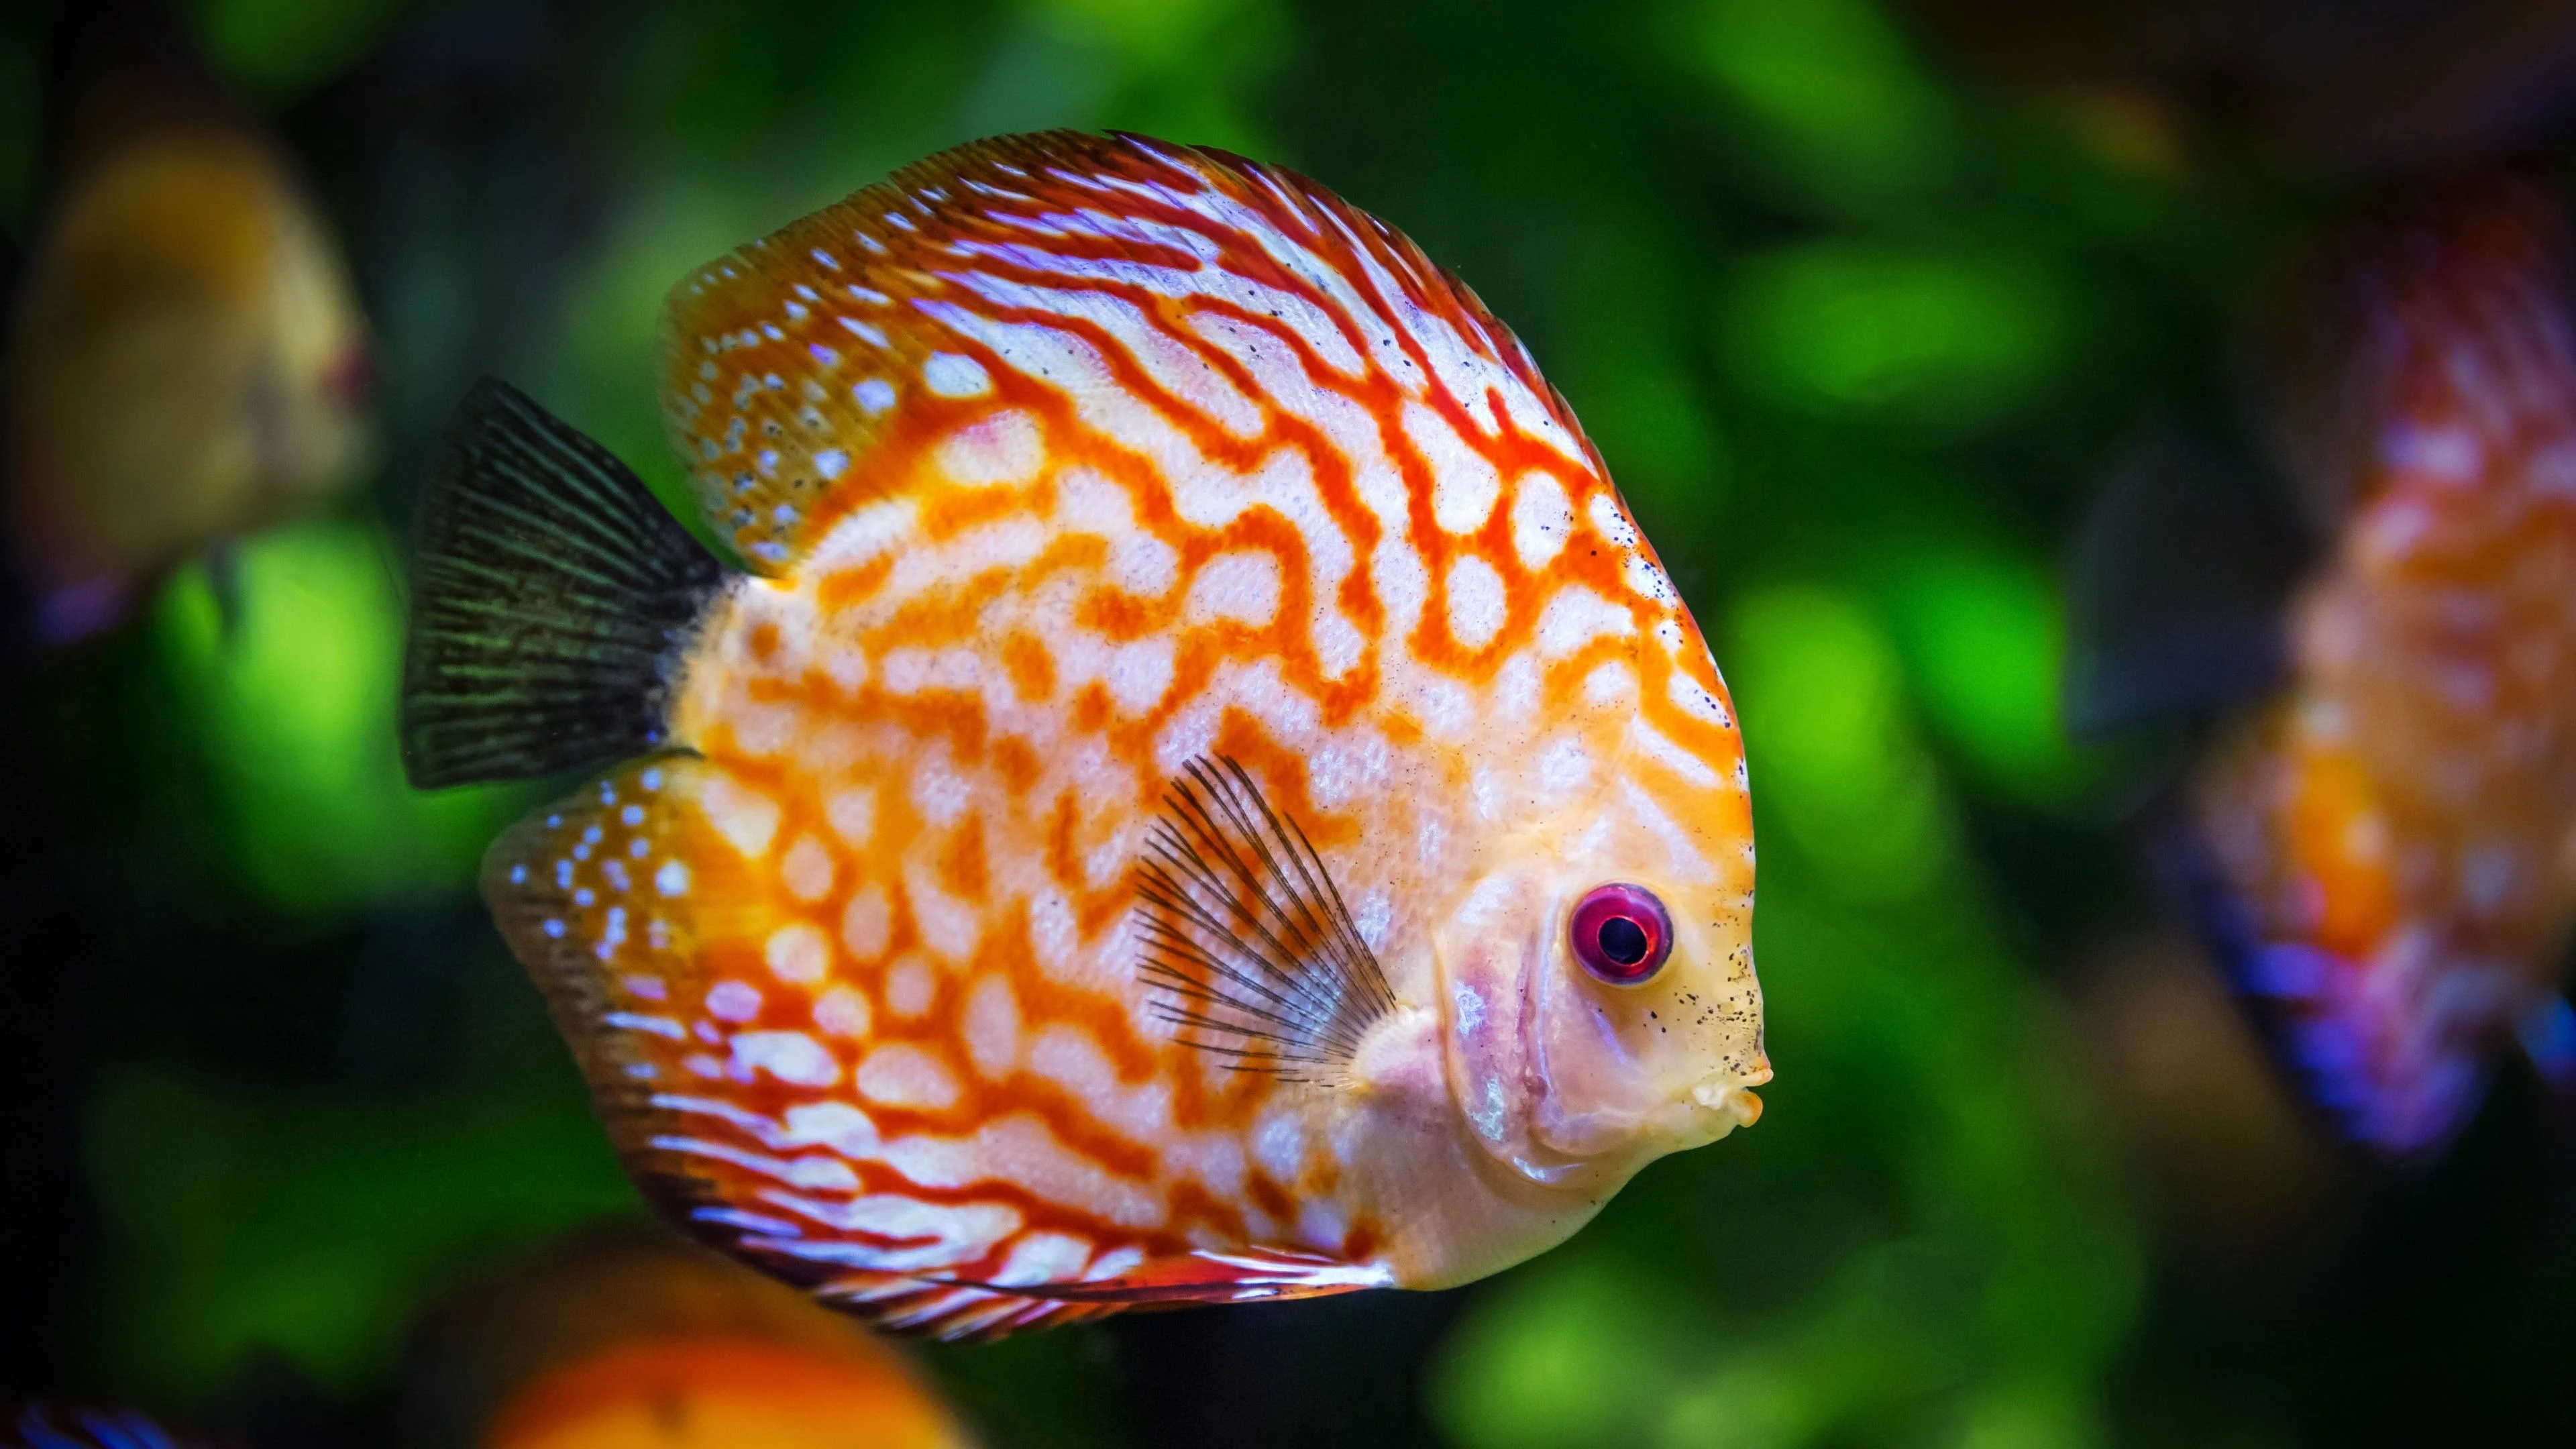 Underwater fish beauty, Captivating wallpapers, Marine life, Aquatic wonder, 3840x2160 4K Desktop